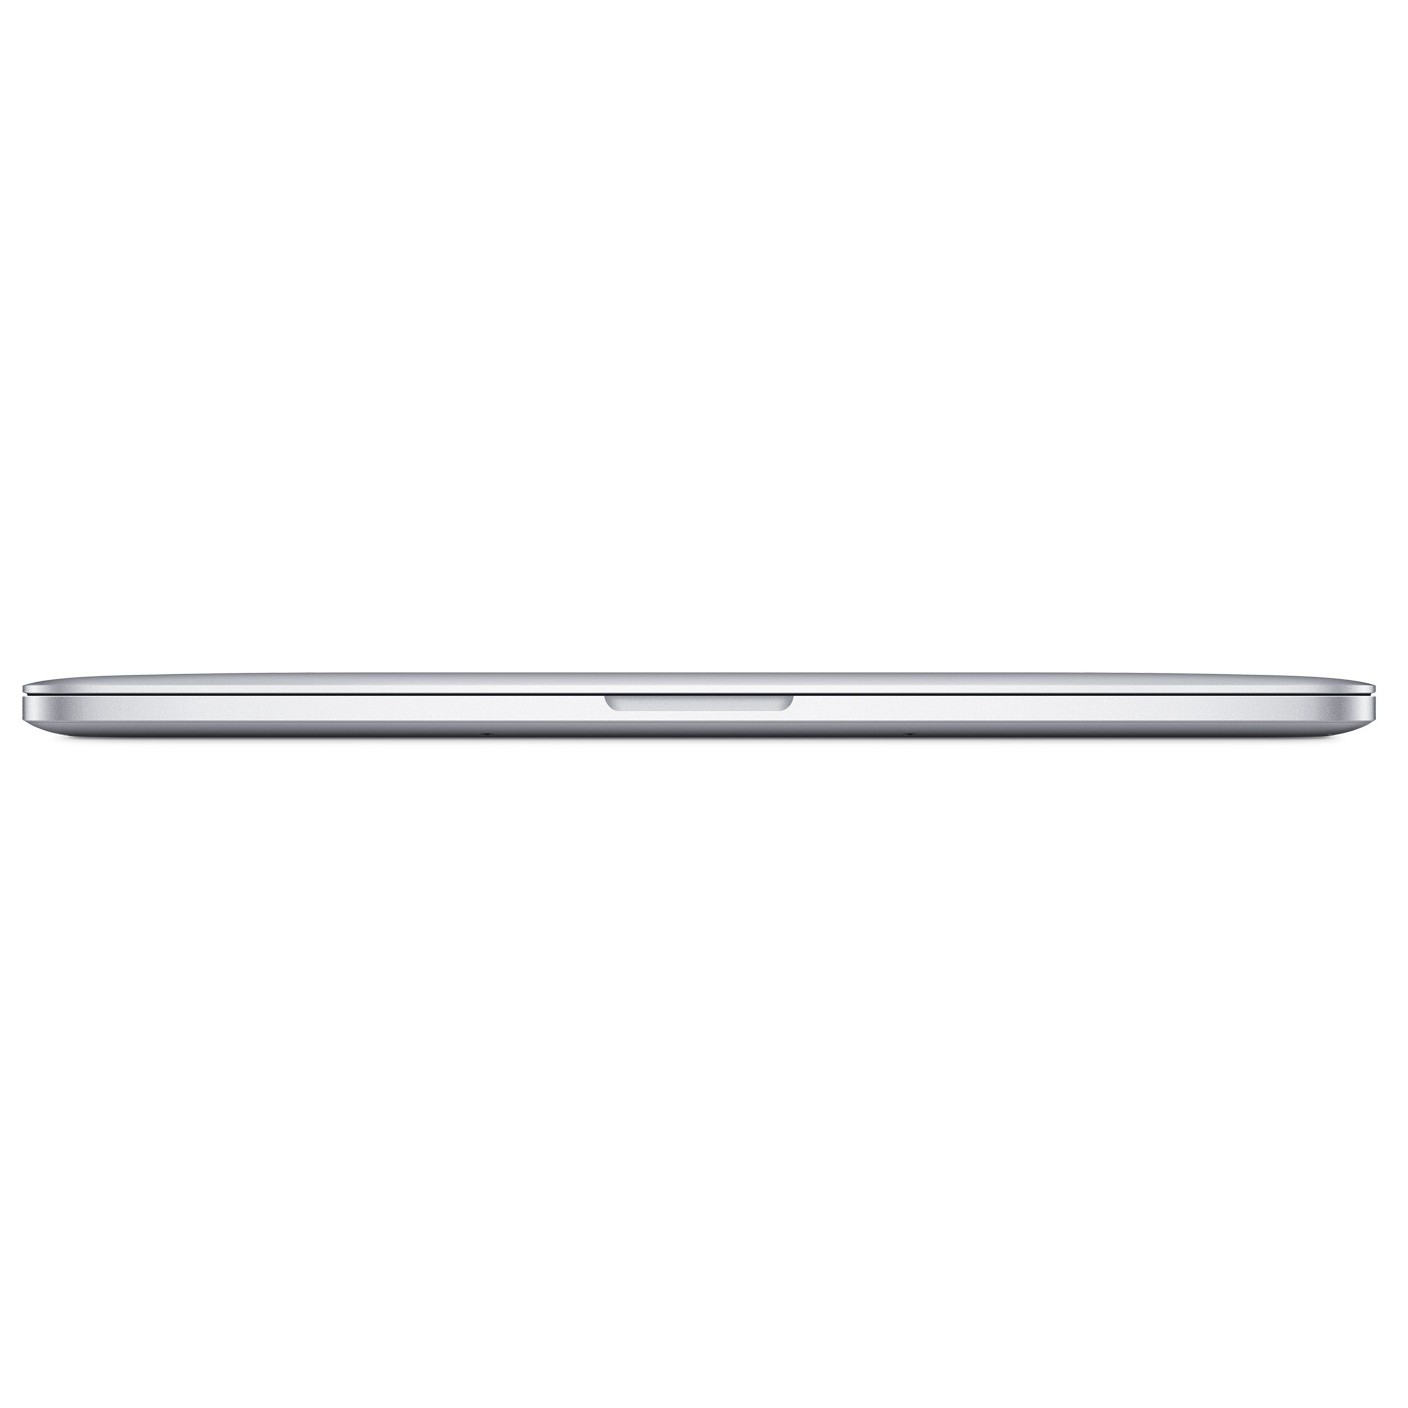 Apple MacBook Pro 13 Silver 2014 (MGX82) б/у